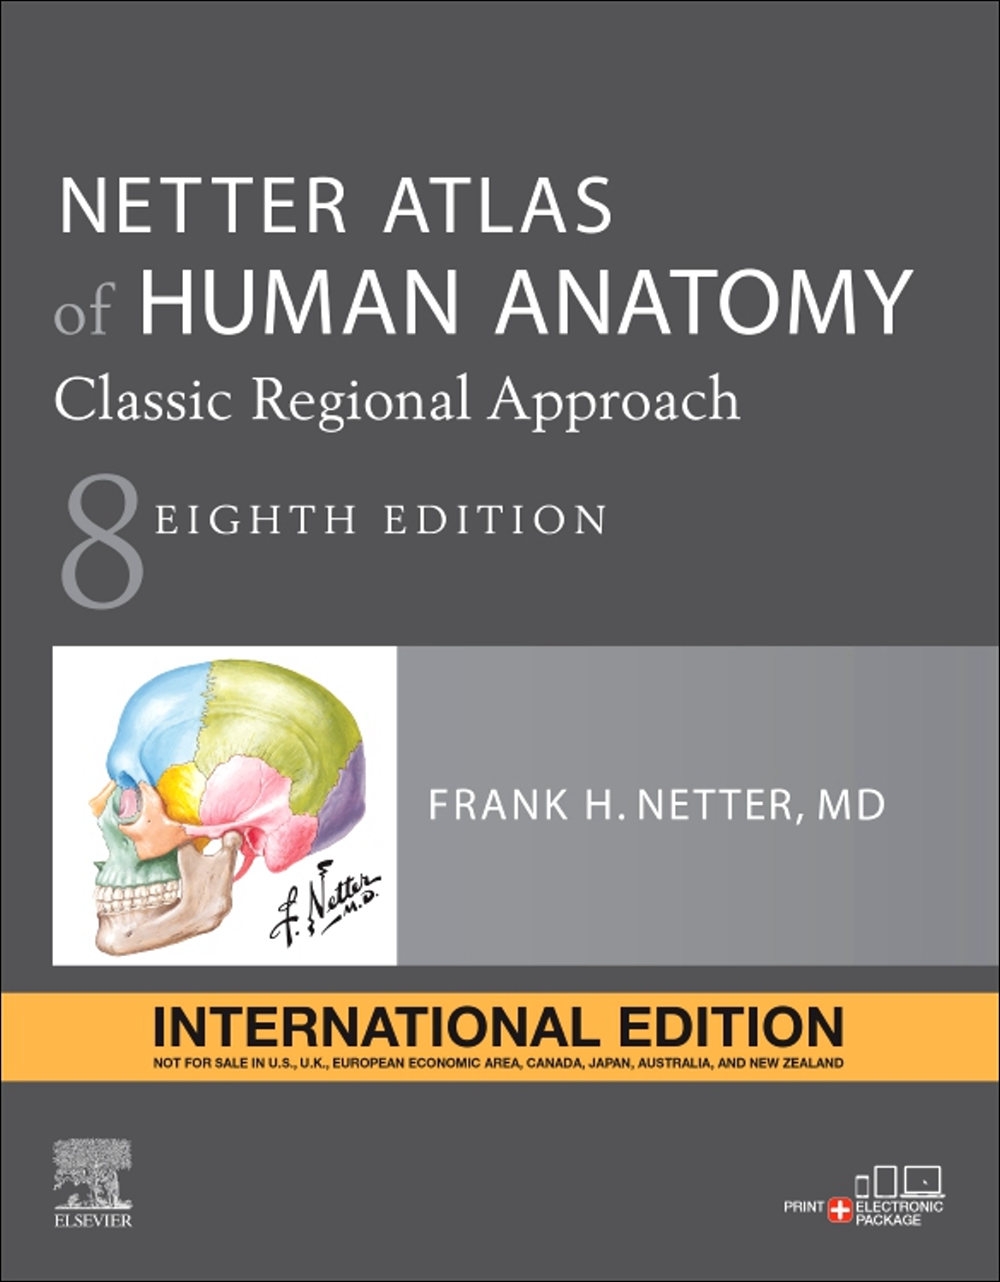 Netter Atlas of Human Anatomy: Classic Regional Approach, 8th Edition (International Edition)